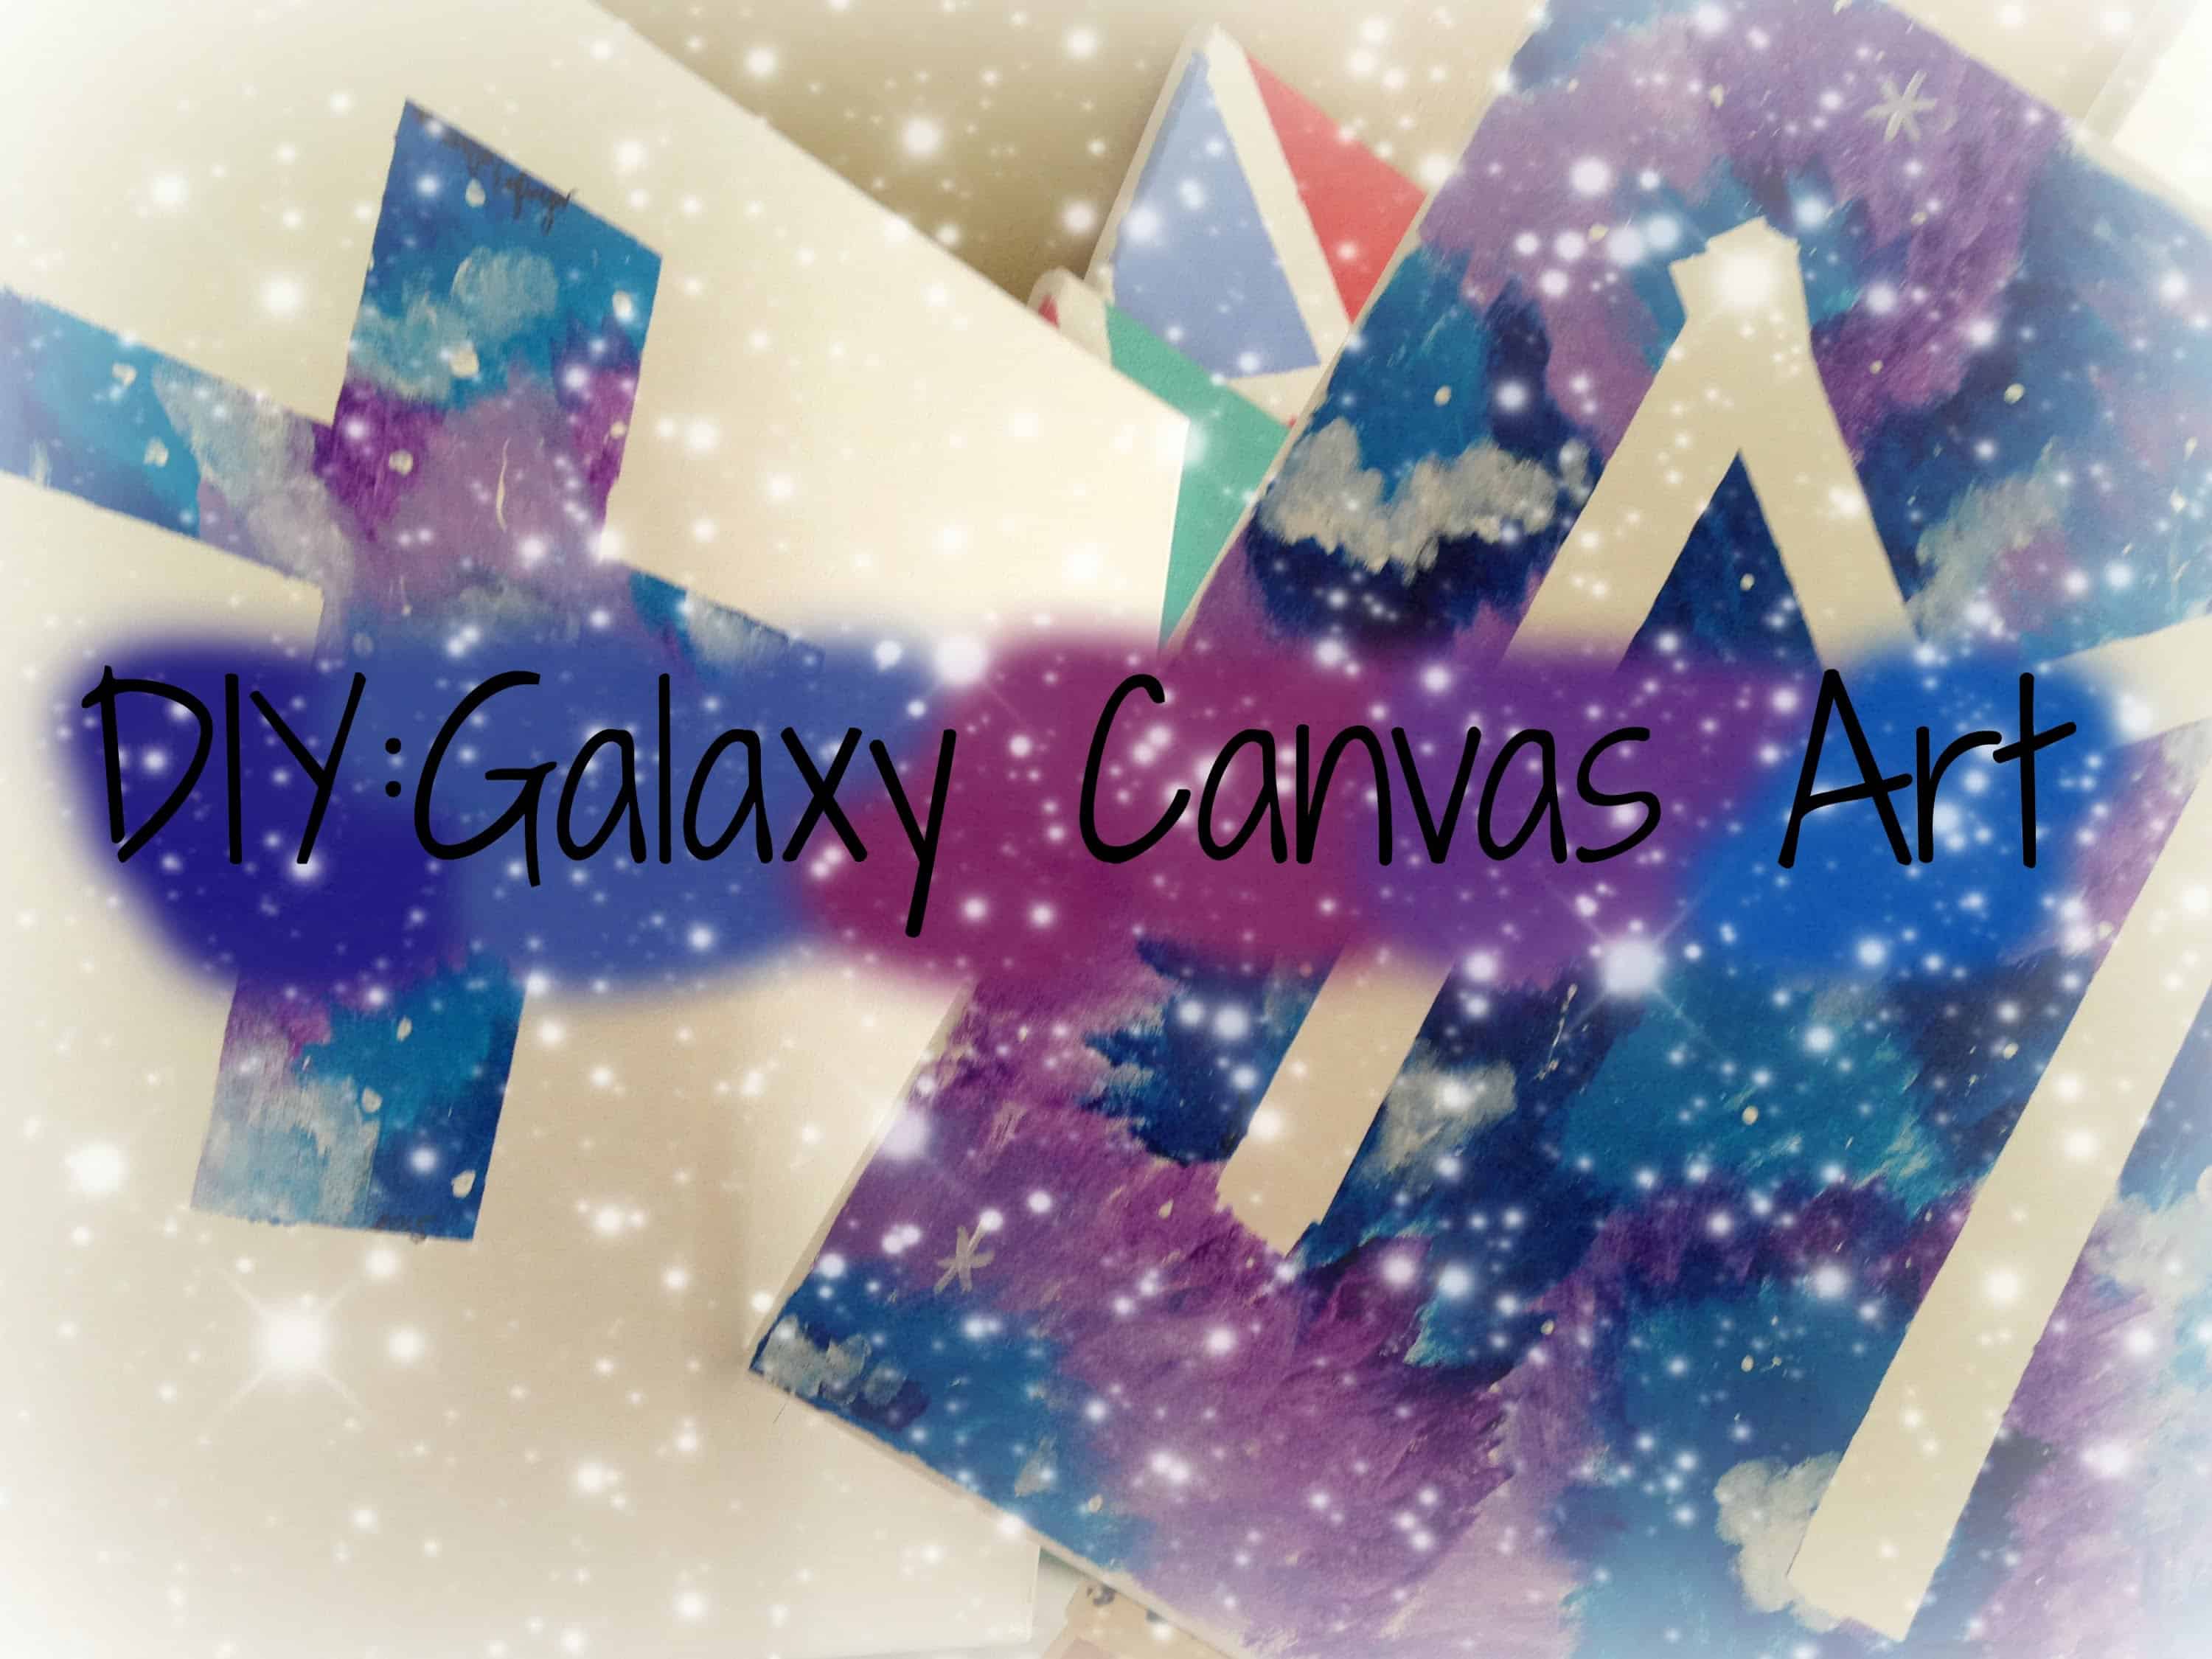 Tape shape galaxy canvas art